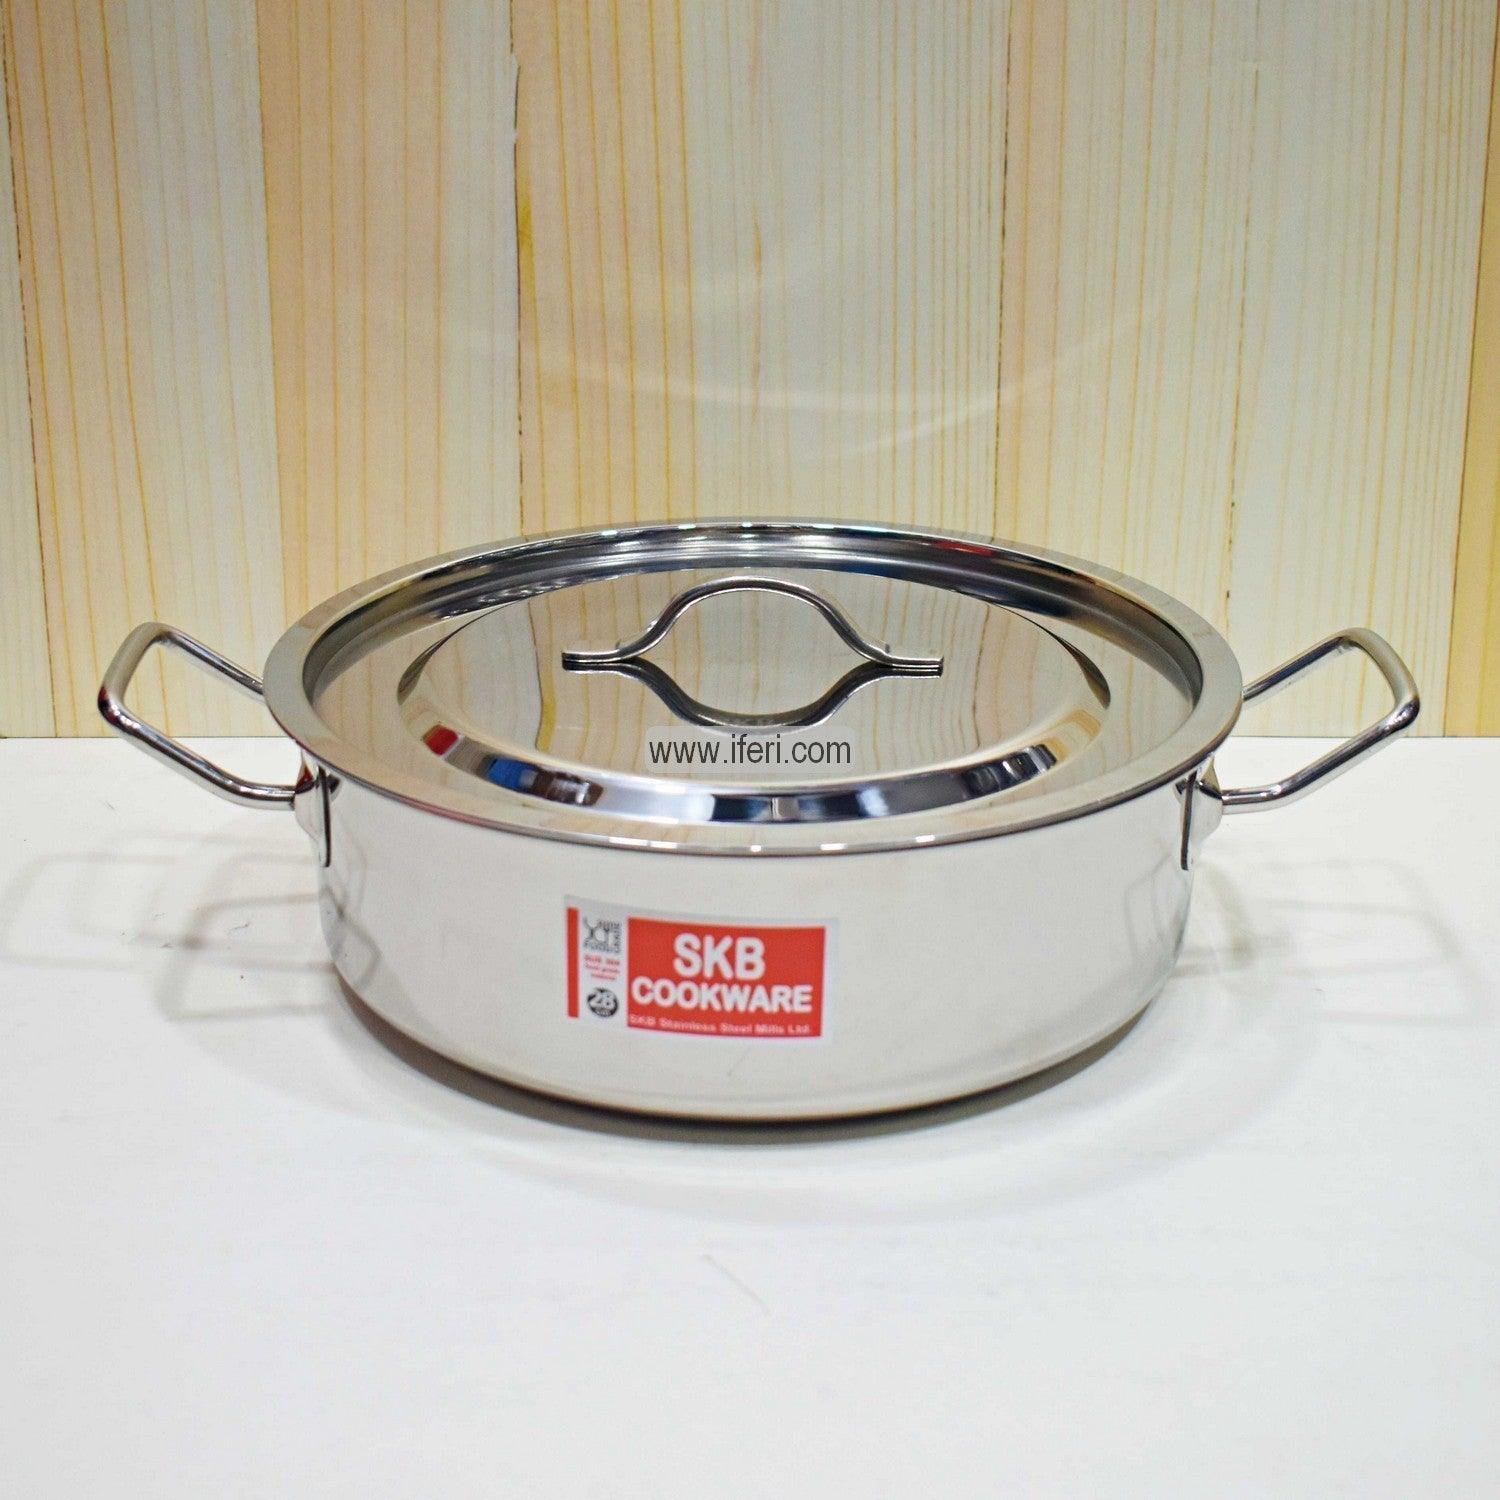 32 cm SKB Stainless Steel Saucepan SN0704-4 Price in Bangladesh - iferi.com